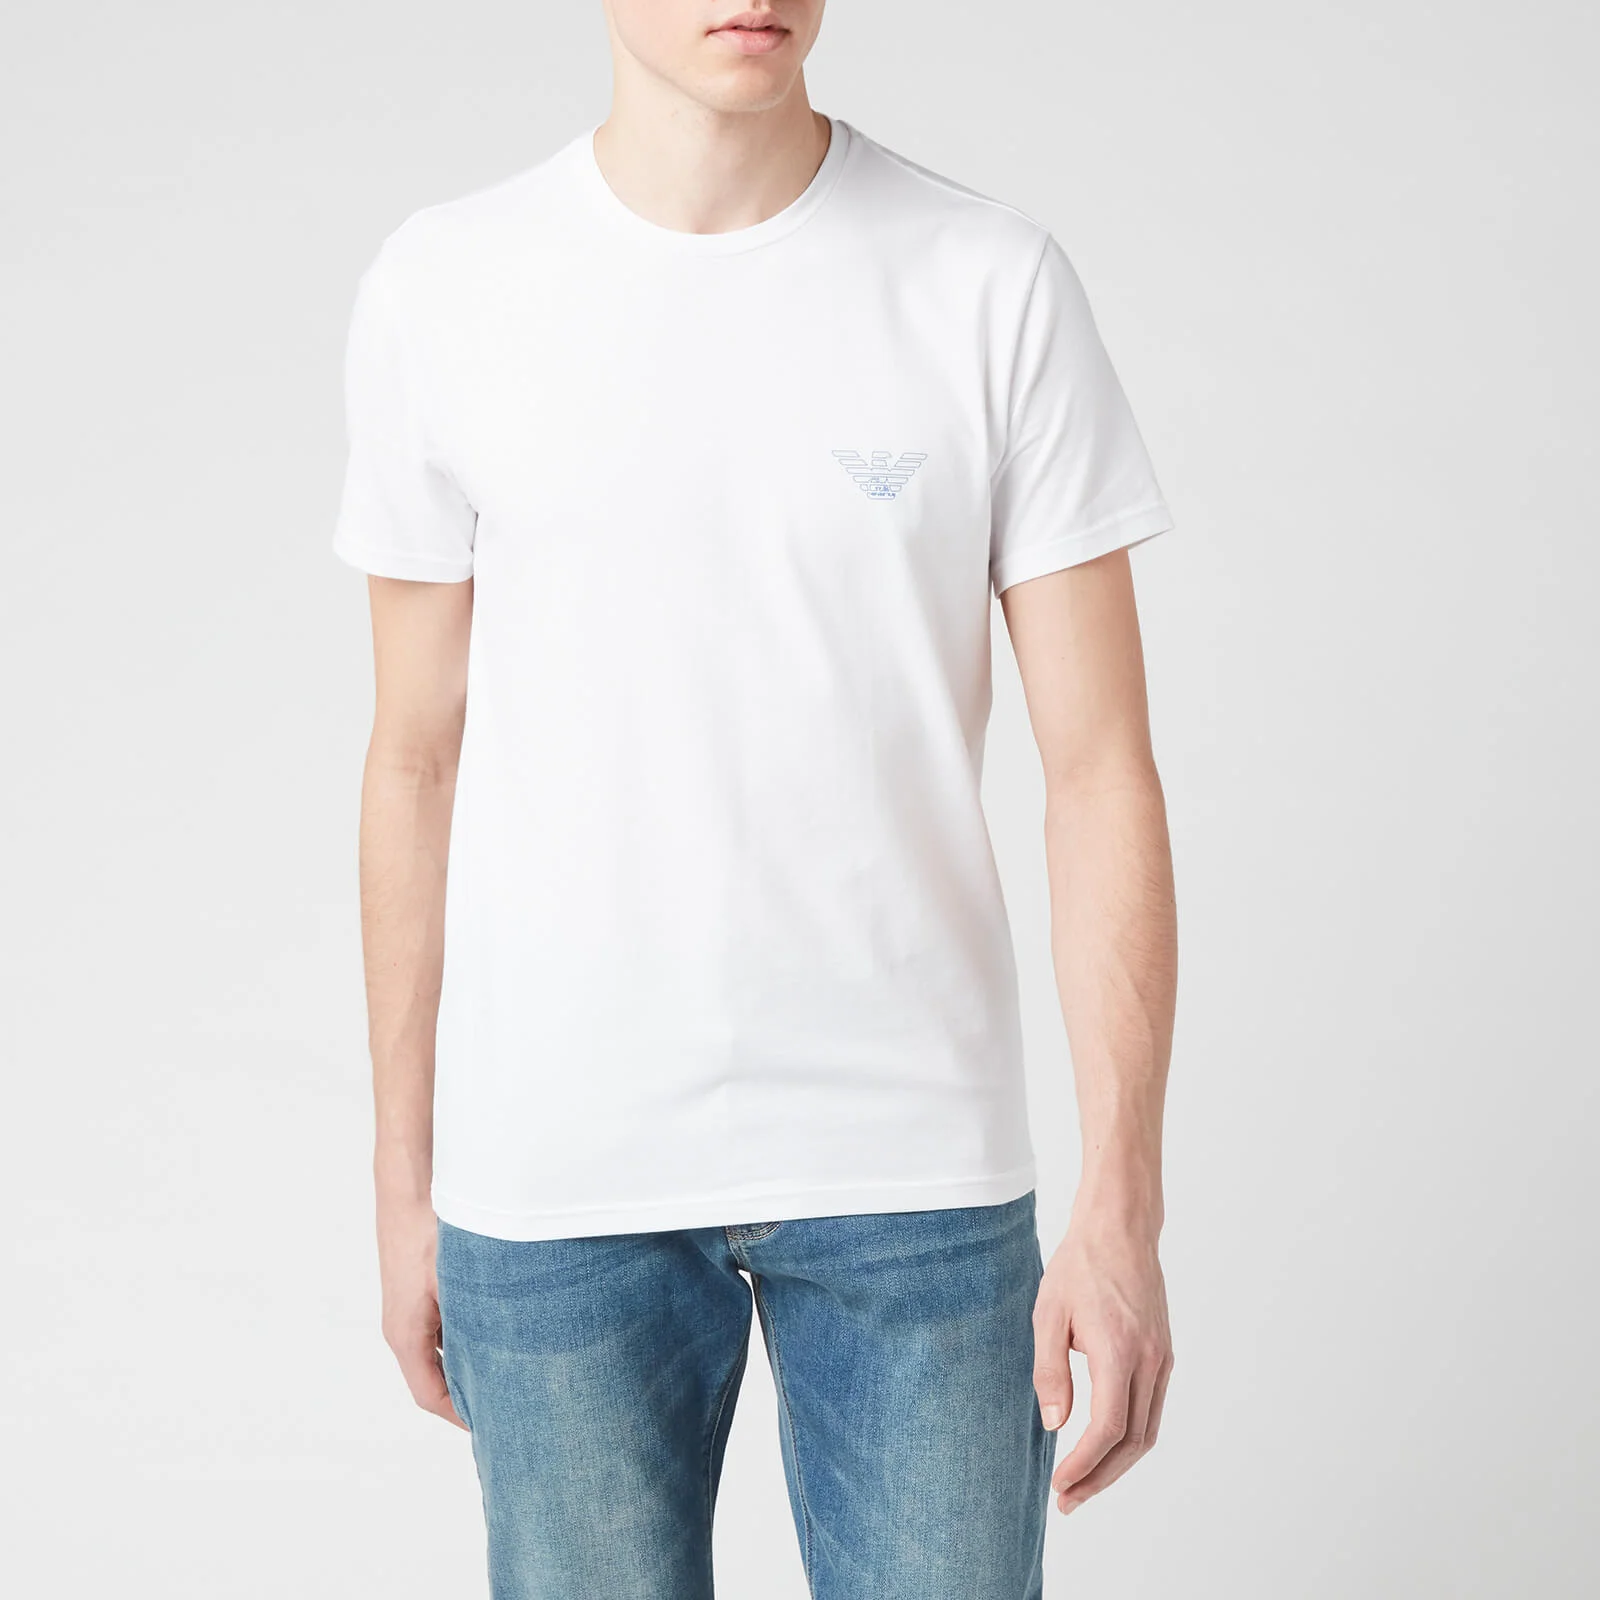 Emporio Armani Men's Organic Cotton T-Shirt - White Image 1